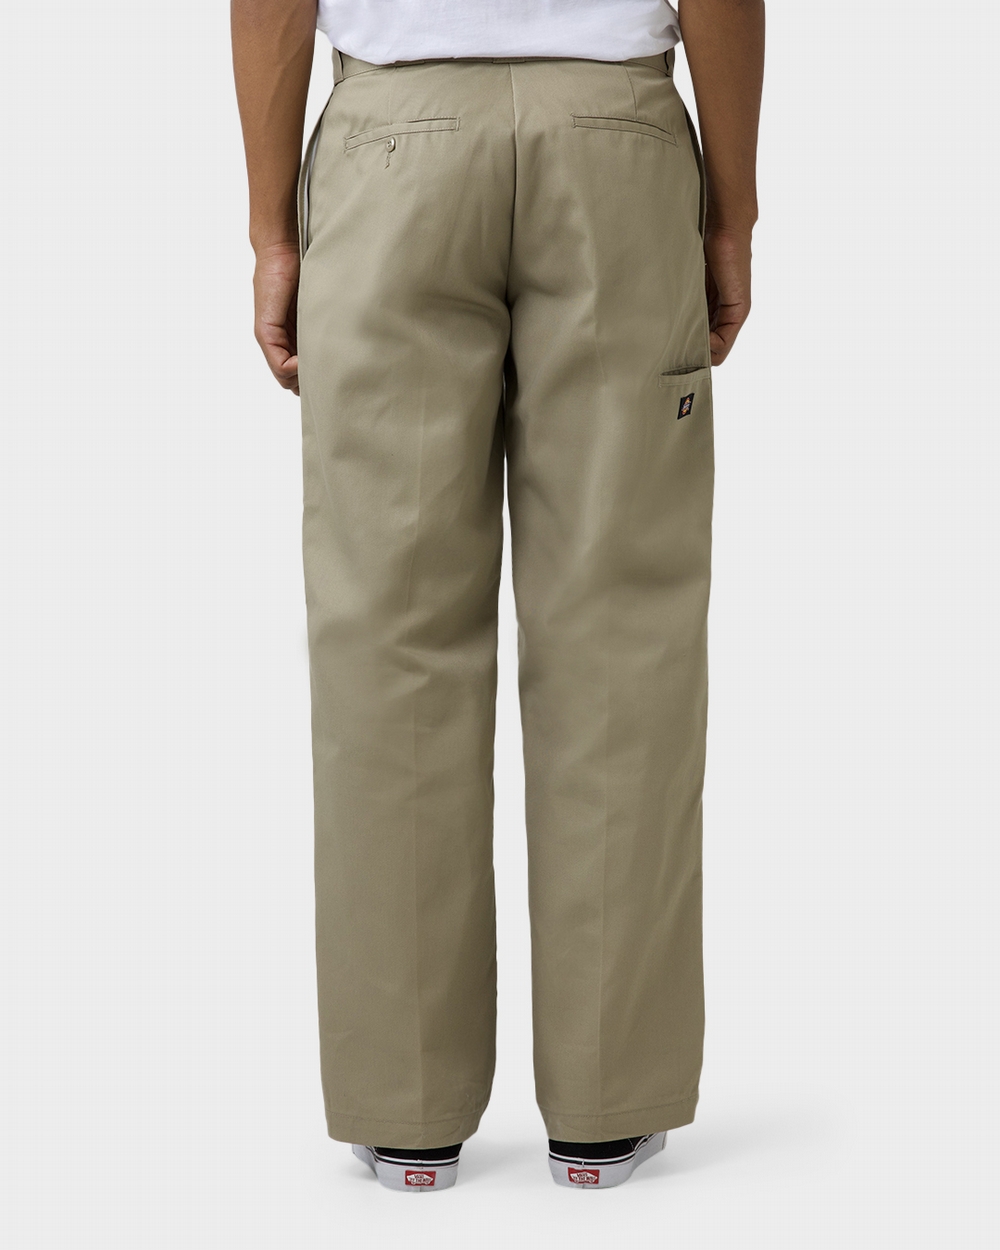 Unisex Cotton Stretch Drill Cuffed Work Pants WP28  Flash Uniforms